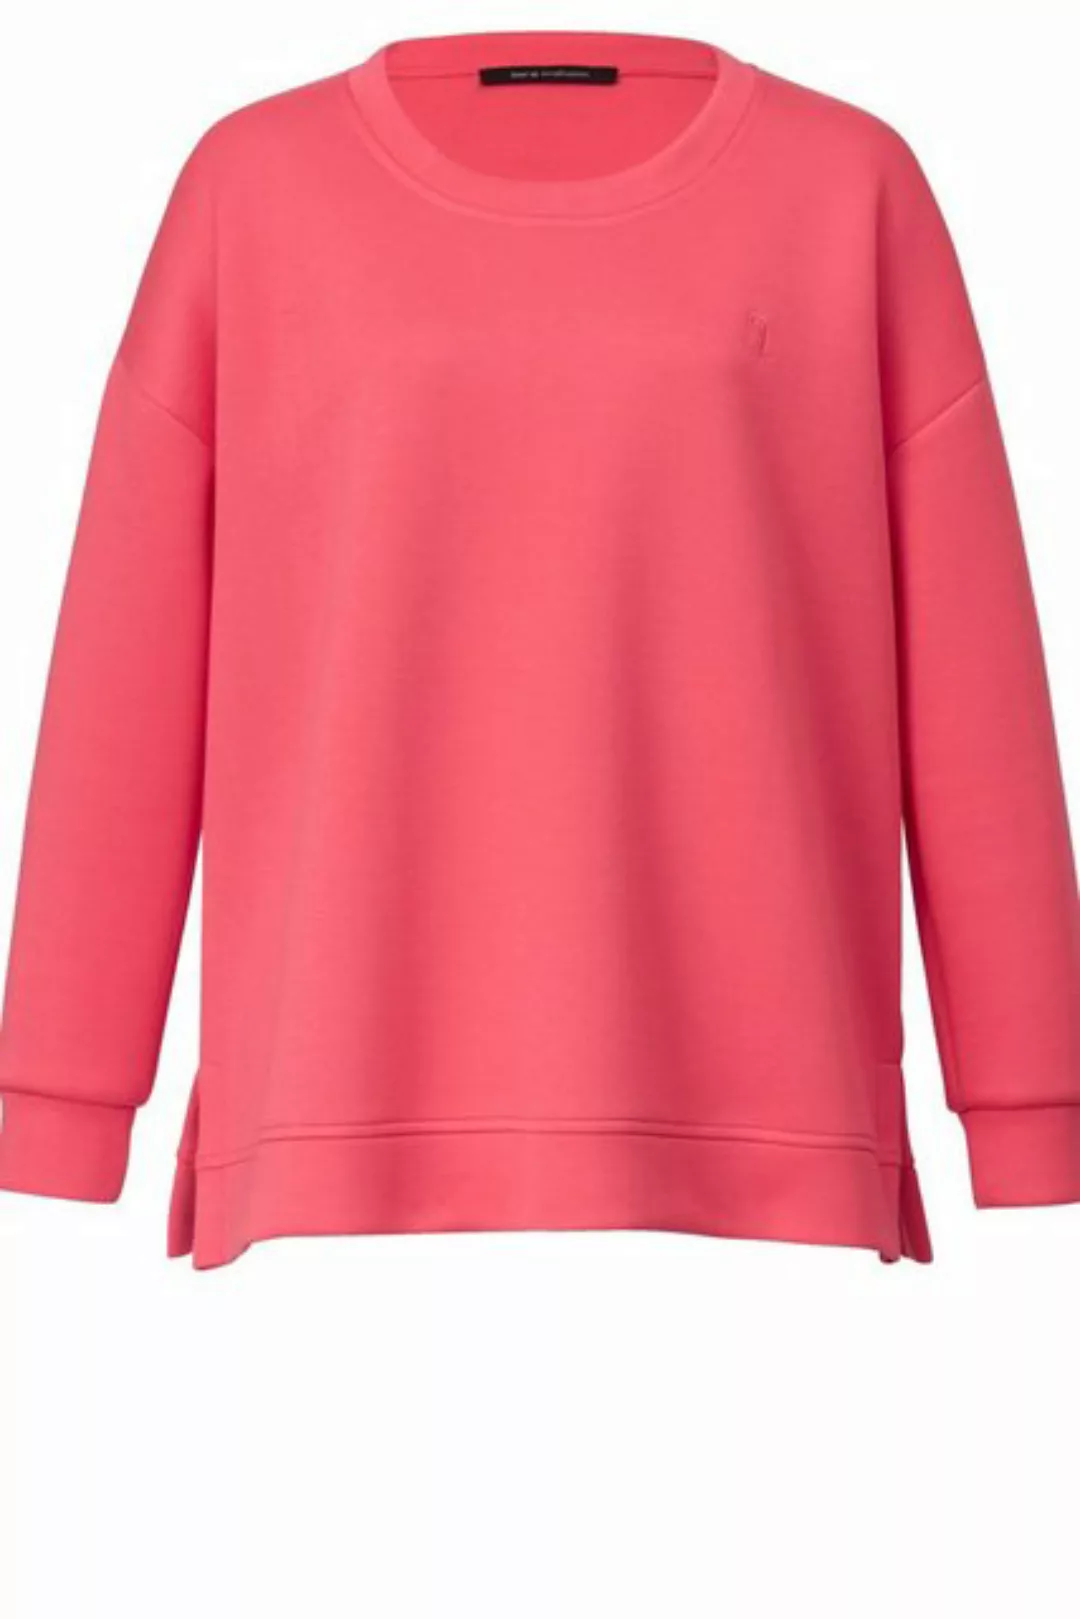 Sara Lindholm Sweatshirt Sweatshirt oversized Langarm günstig online kaufen